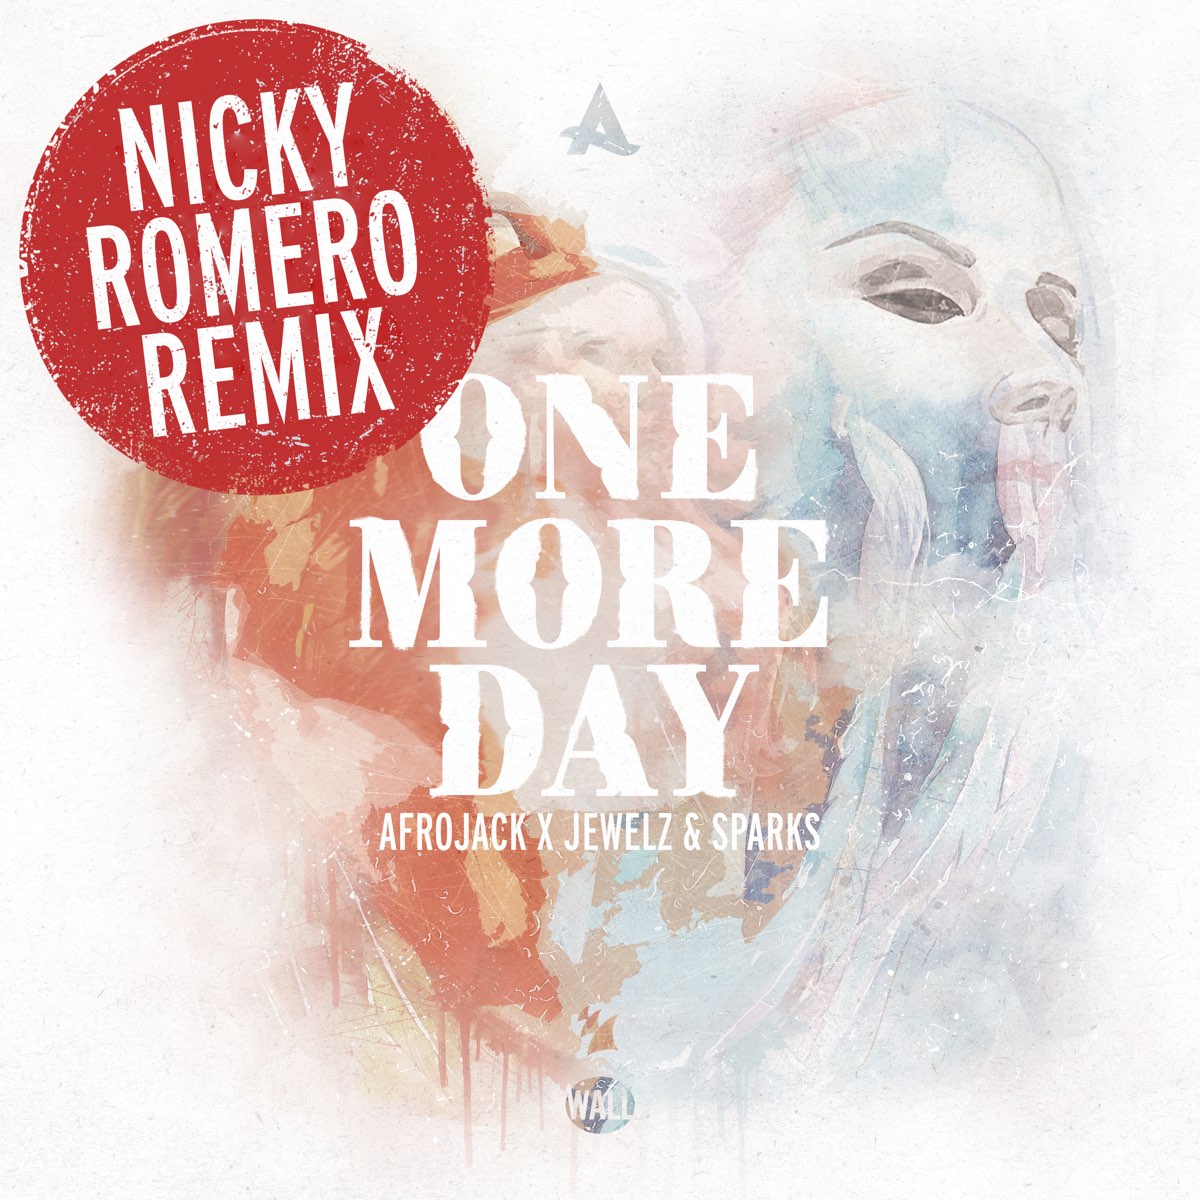 Pedro jaxomi agatino romero remix. Jewelz & Sparks. One Day more. Afrojack and Jewelz & Sparks – one more Day (Nicky Romero Remix). Nicky Romero Remix.